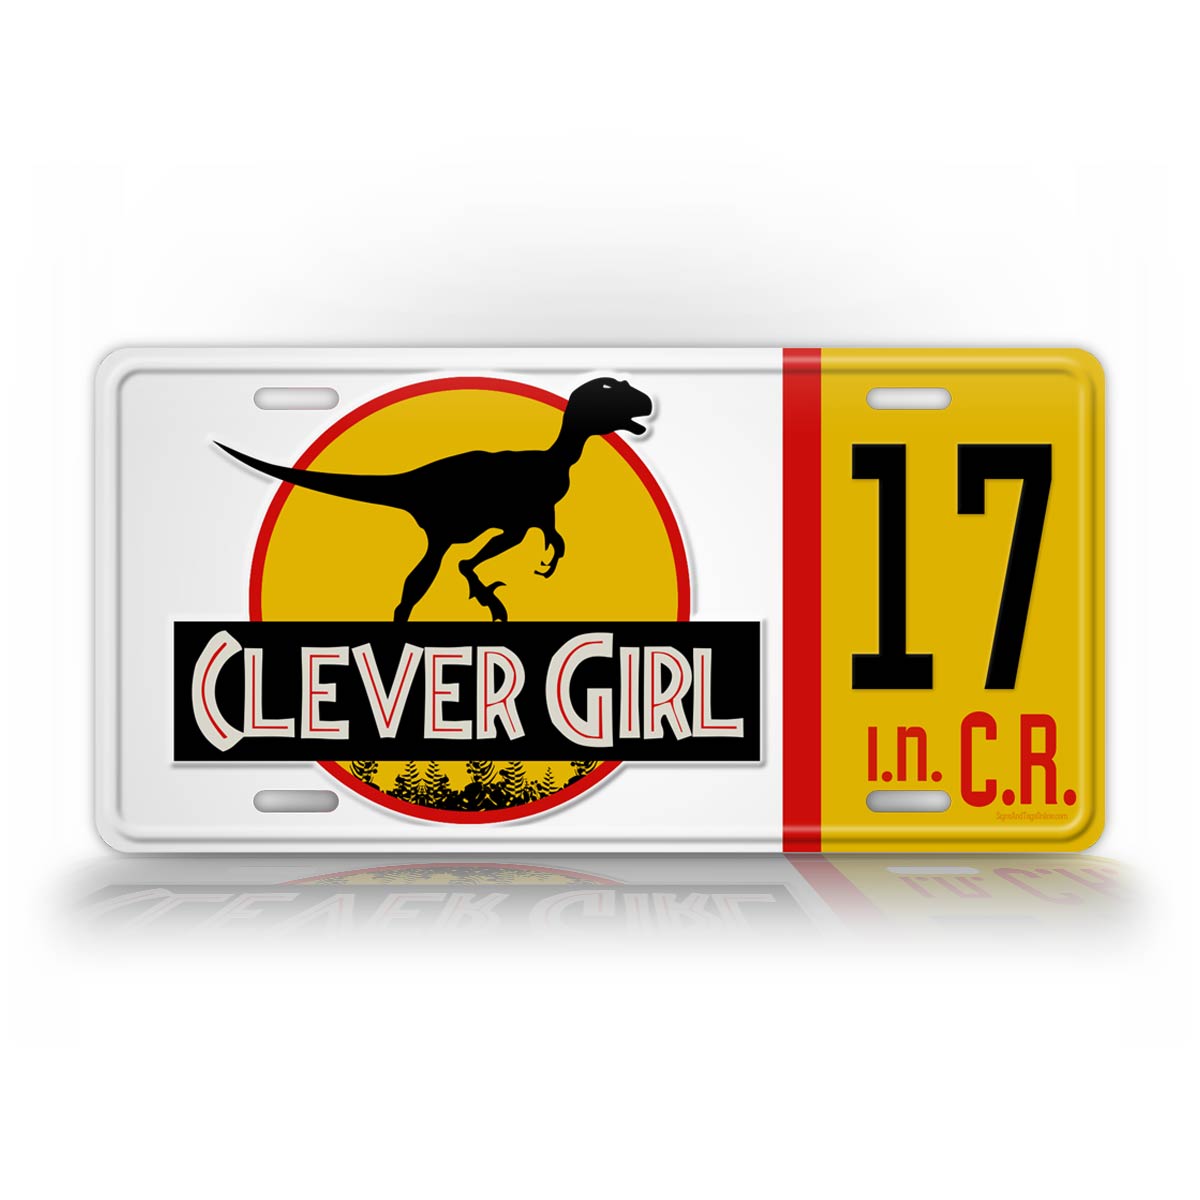 Jurassic World Style Clever Girl Dinosaur License Plate 